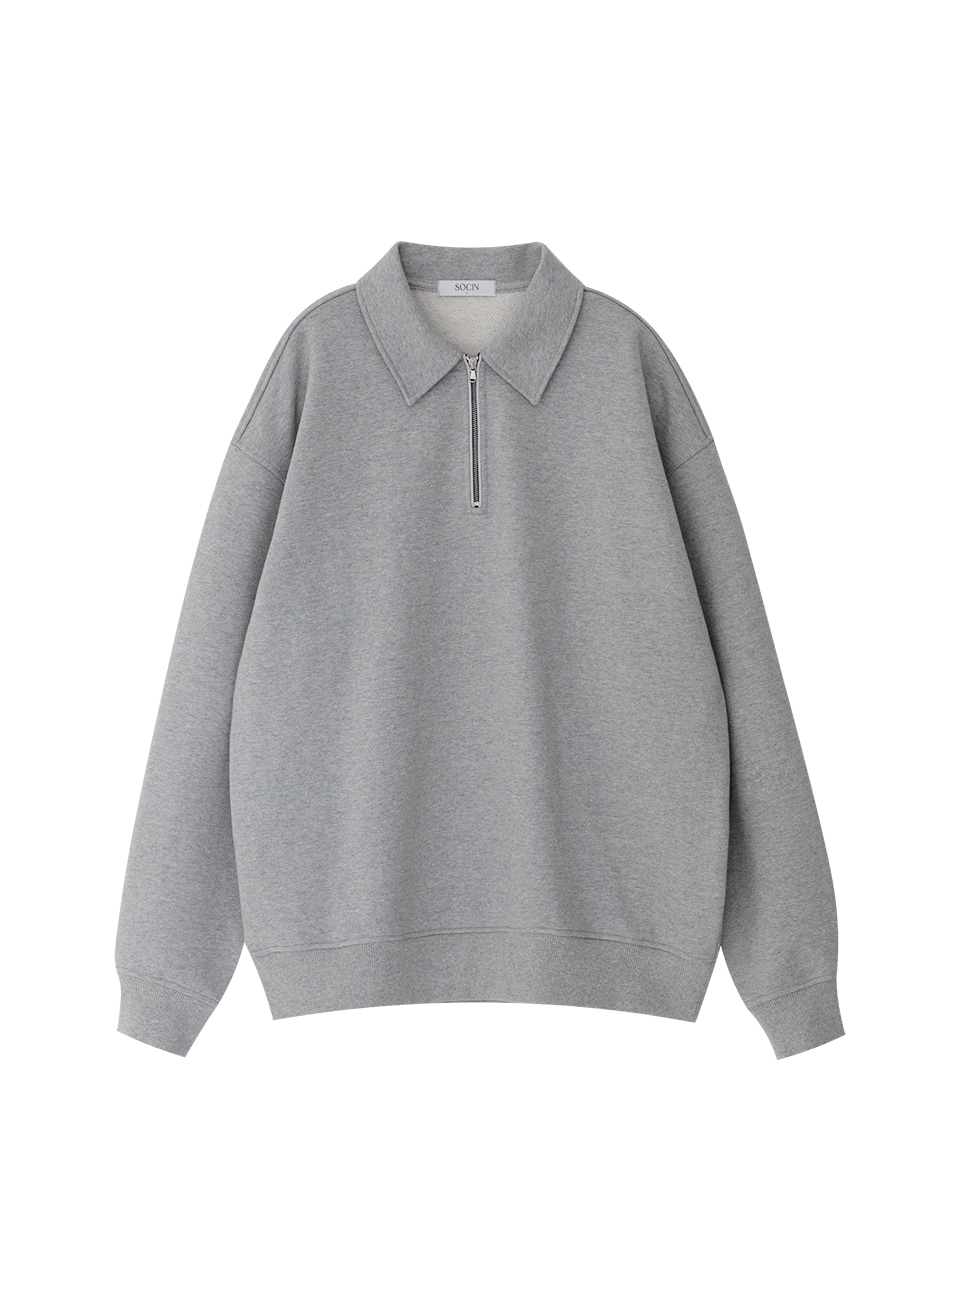 Collared Half Zip Sweatshirts (Grey)